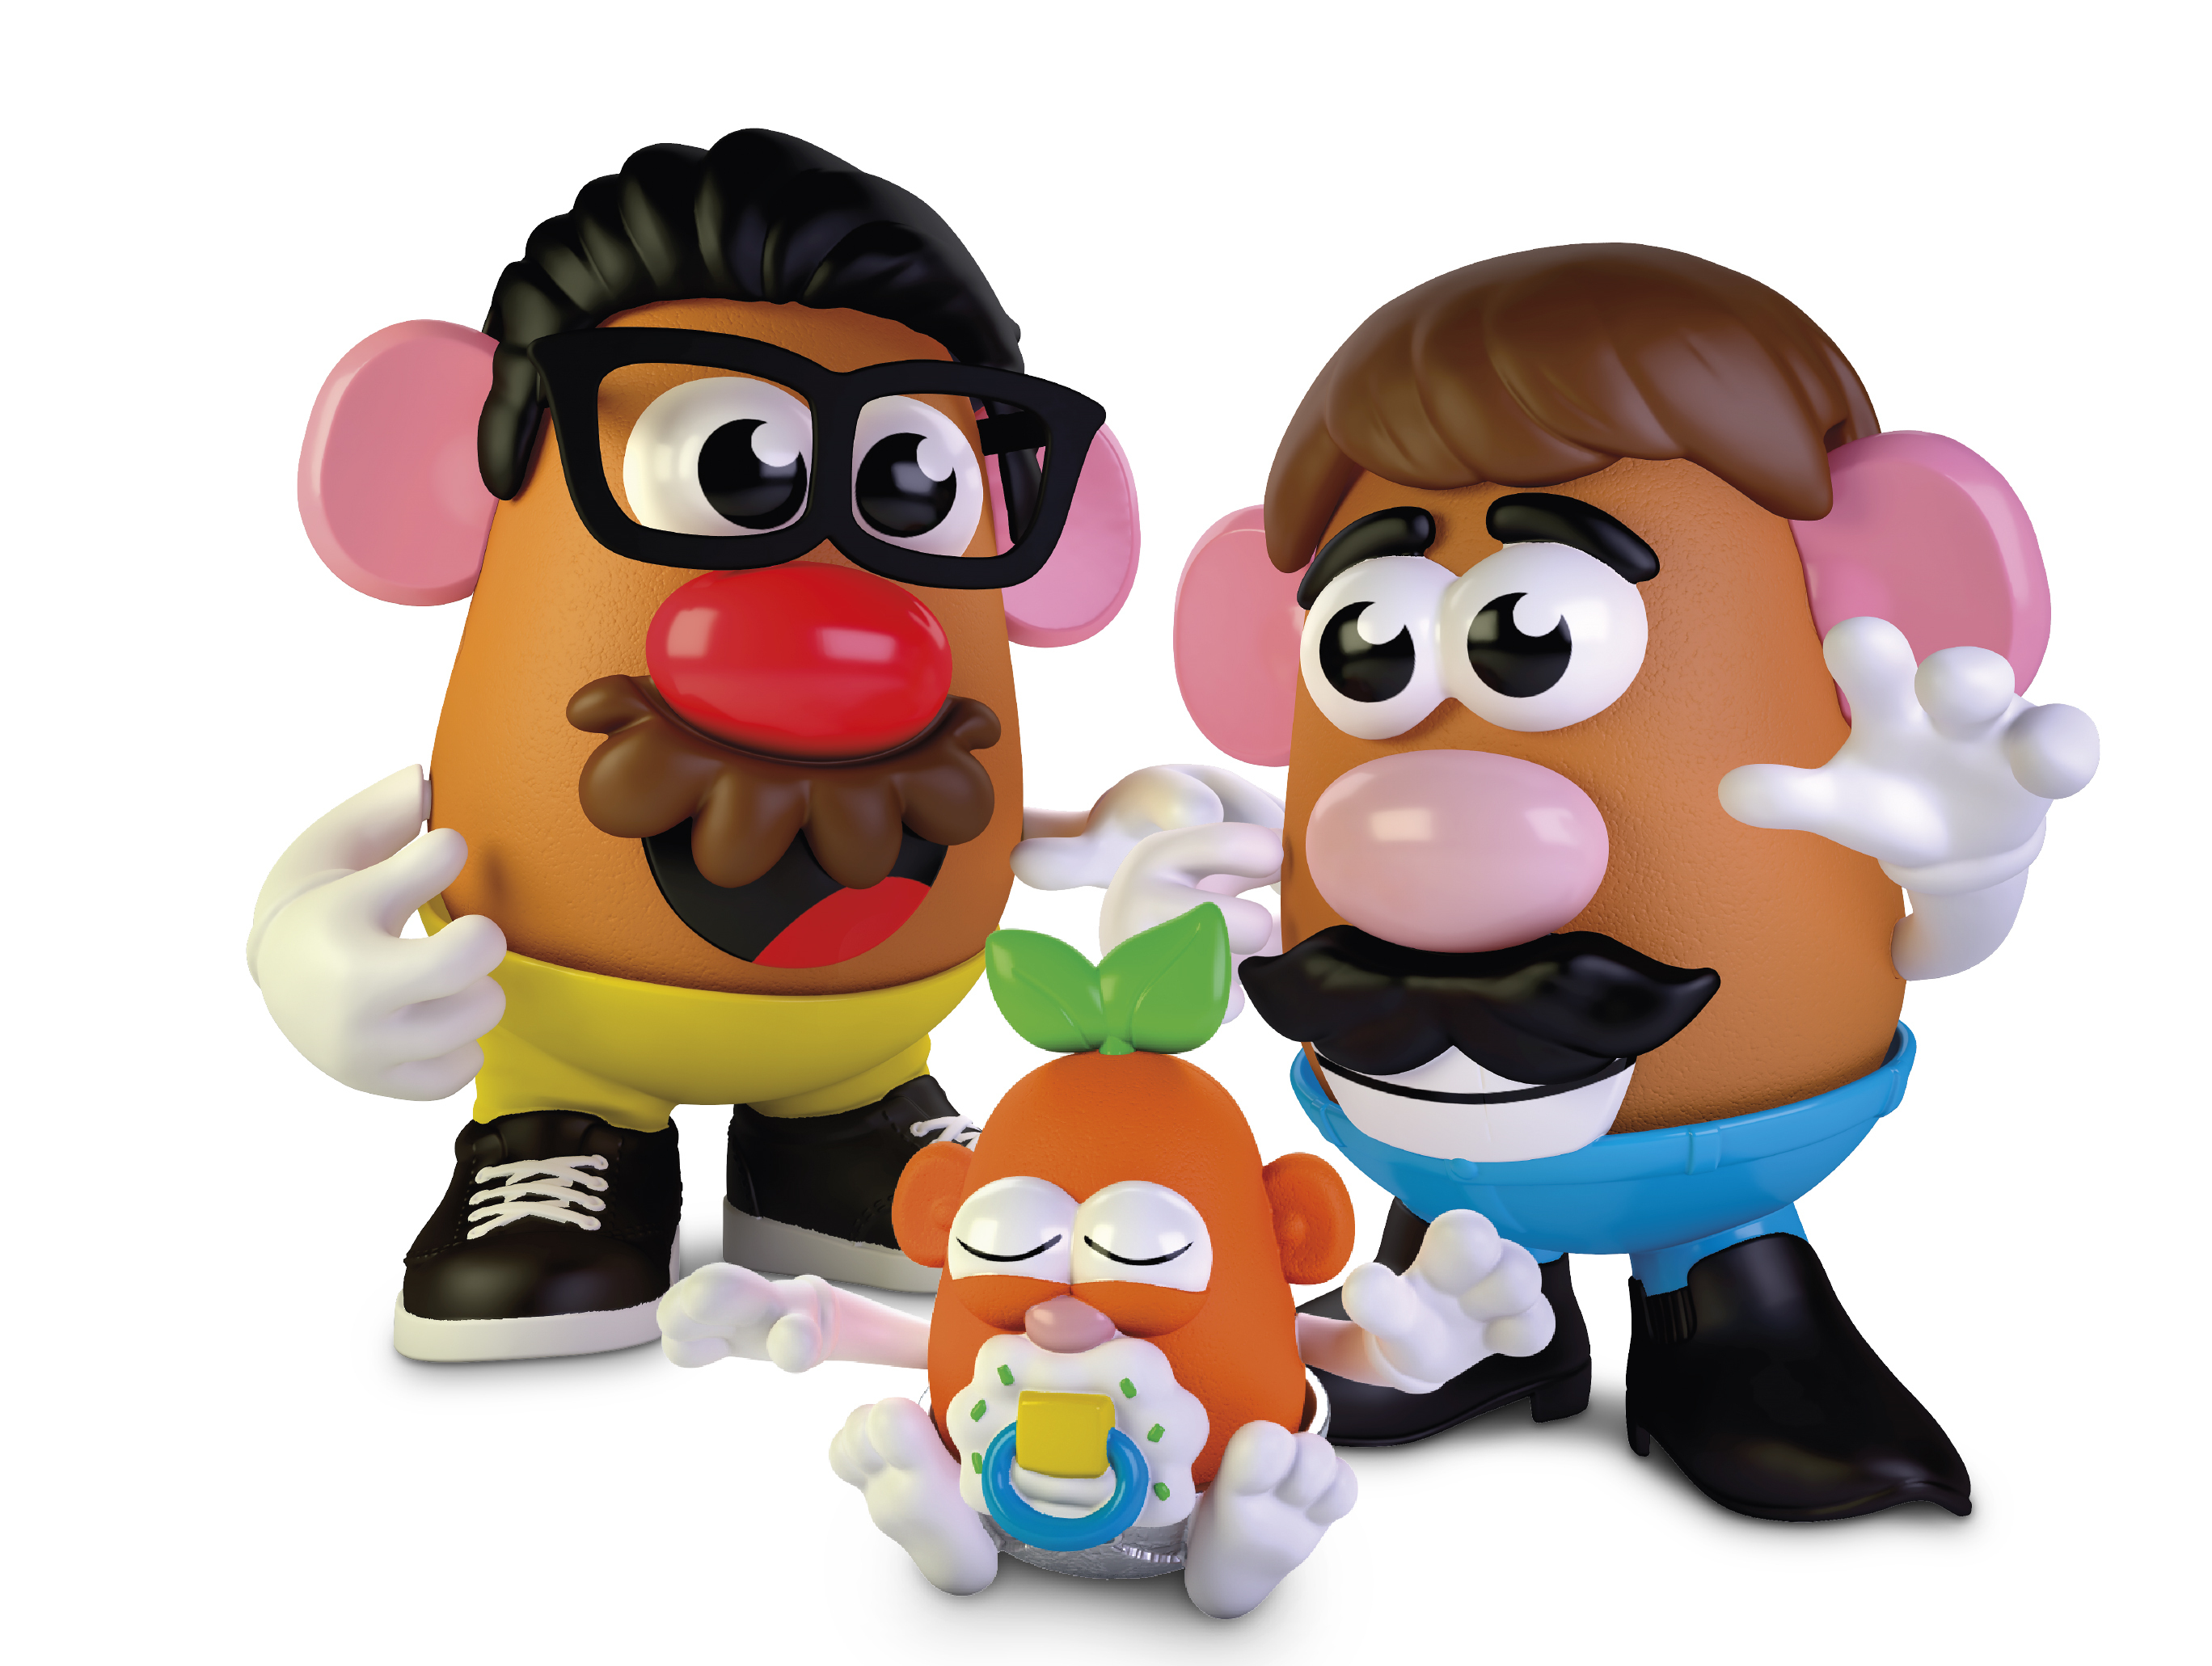 Hasbro Welcomes The New Potato Head Minus The Mr Or Mrs The Boston Globe